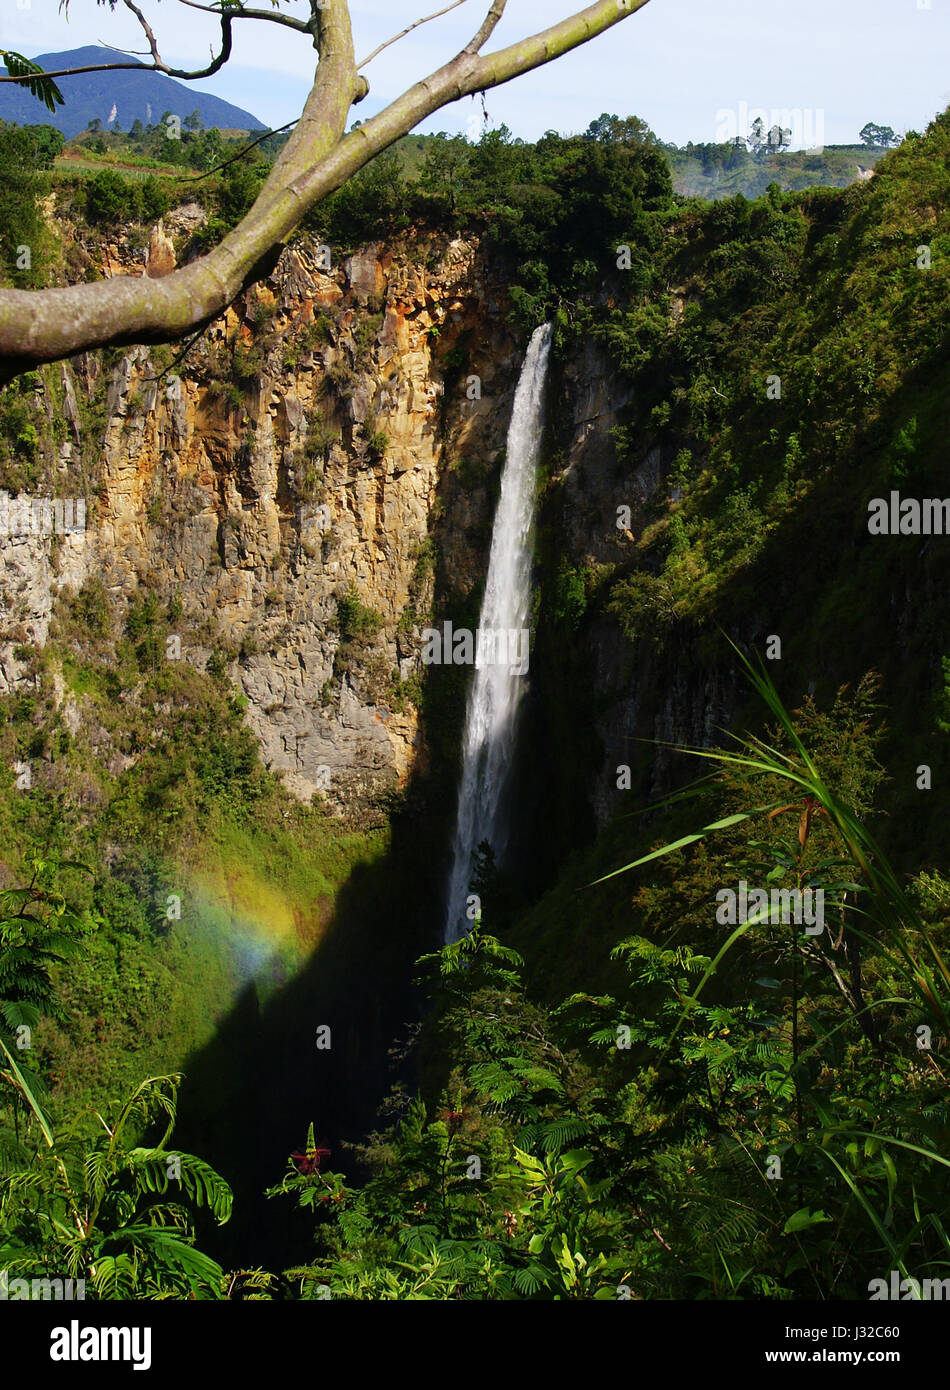 Sipiso-piso waterfall with rainbow, North Sumatera, IndonesiaONY DSC Stock Photo